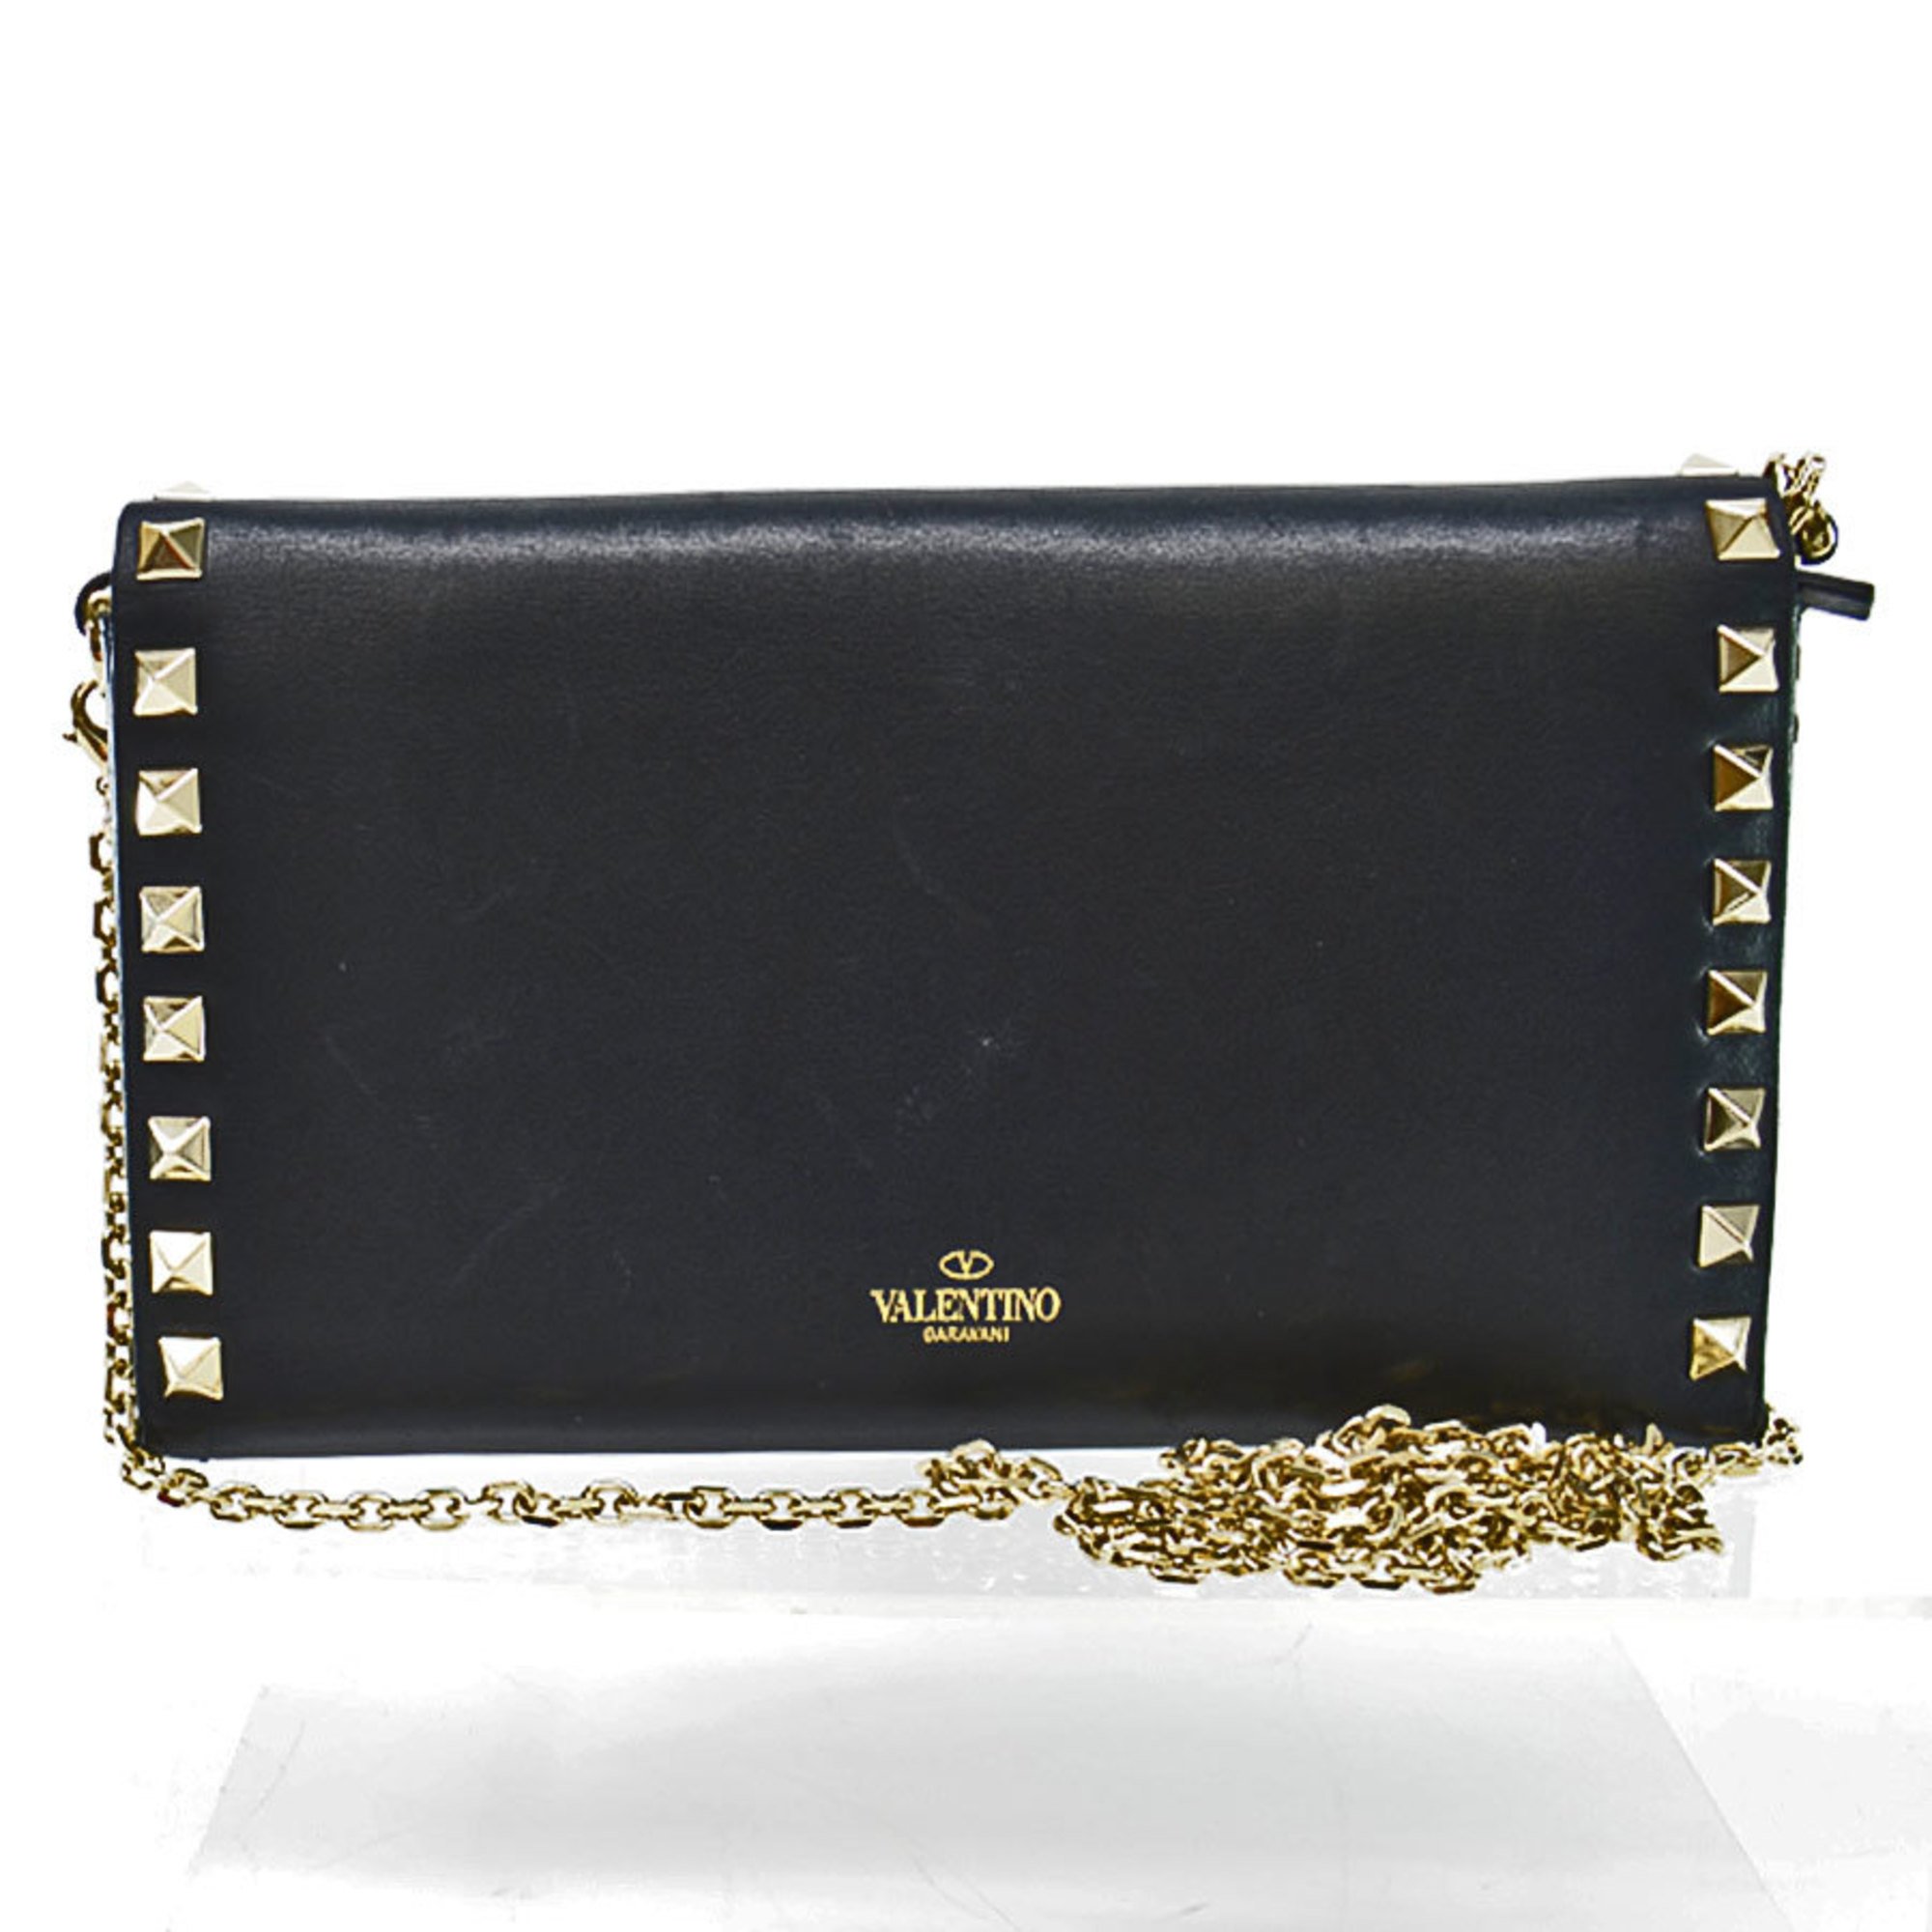 Valentino Garavani VALENTINO GARAVANI long wallet black champagne gold leather bi-fold chain ladies